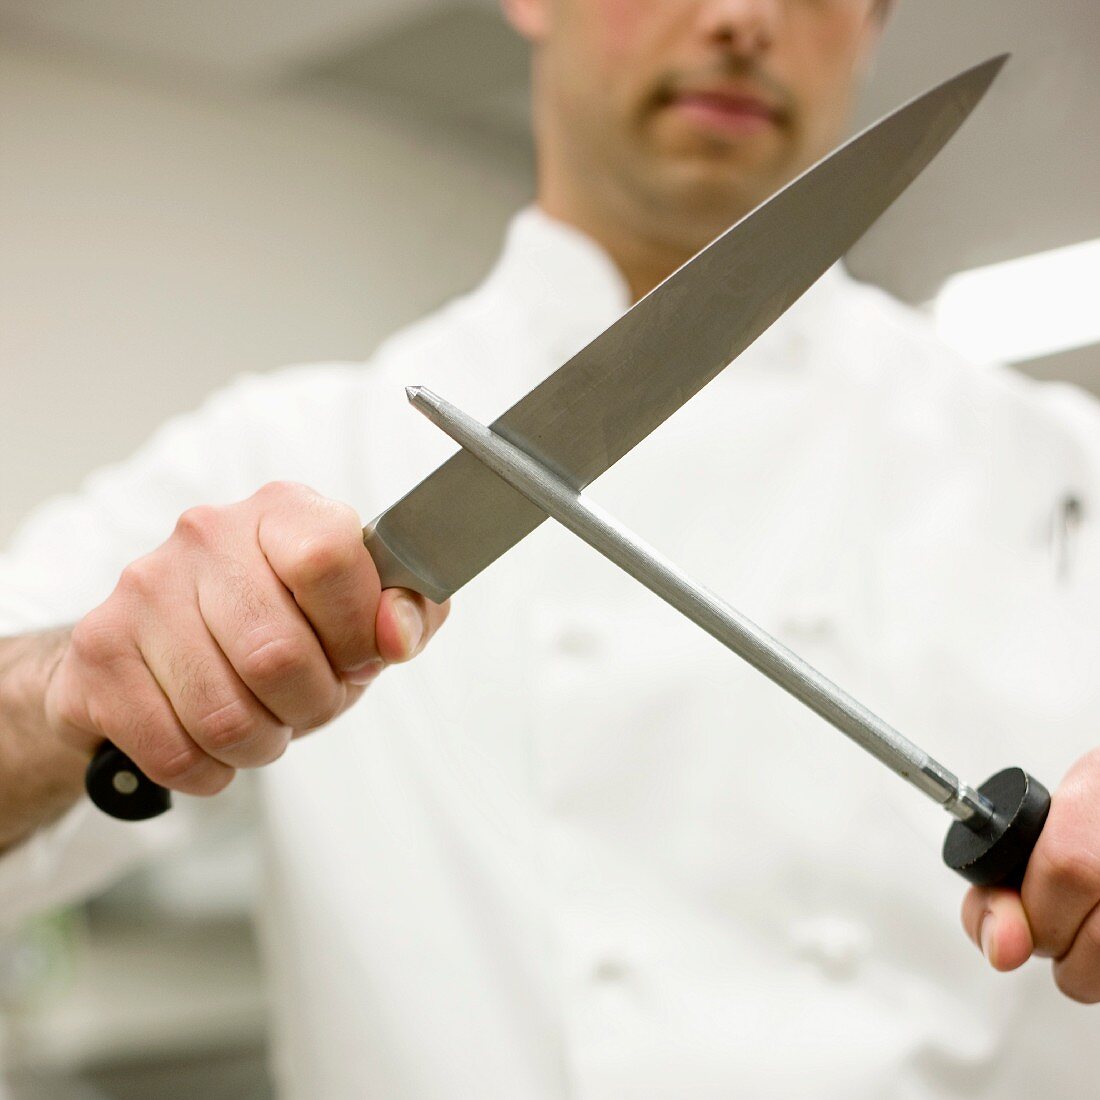 Chef sharpening knife in kitchen